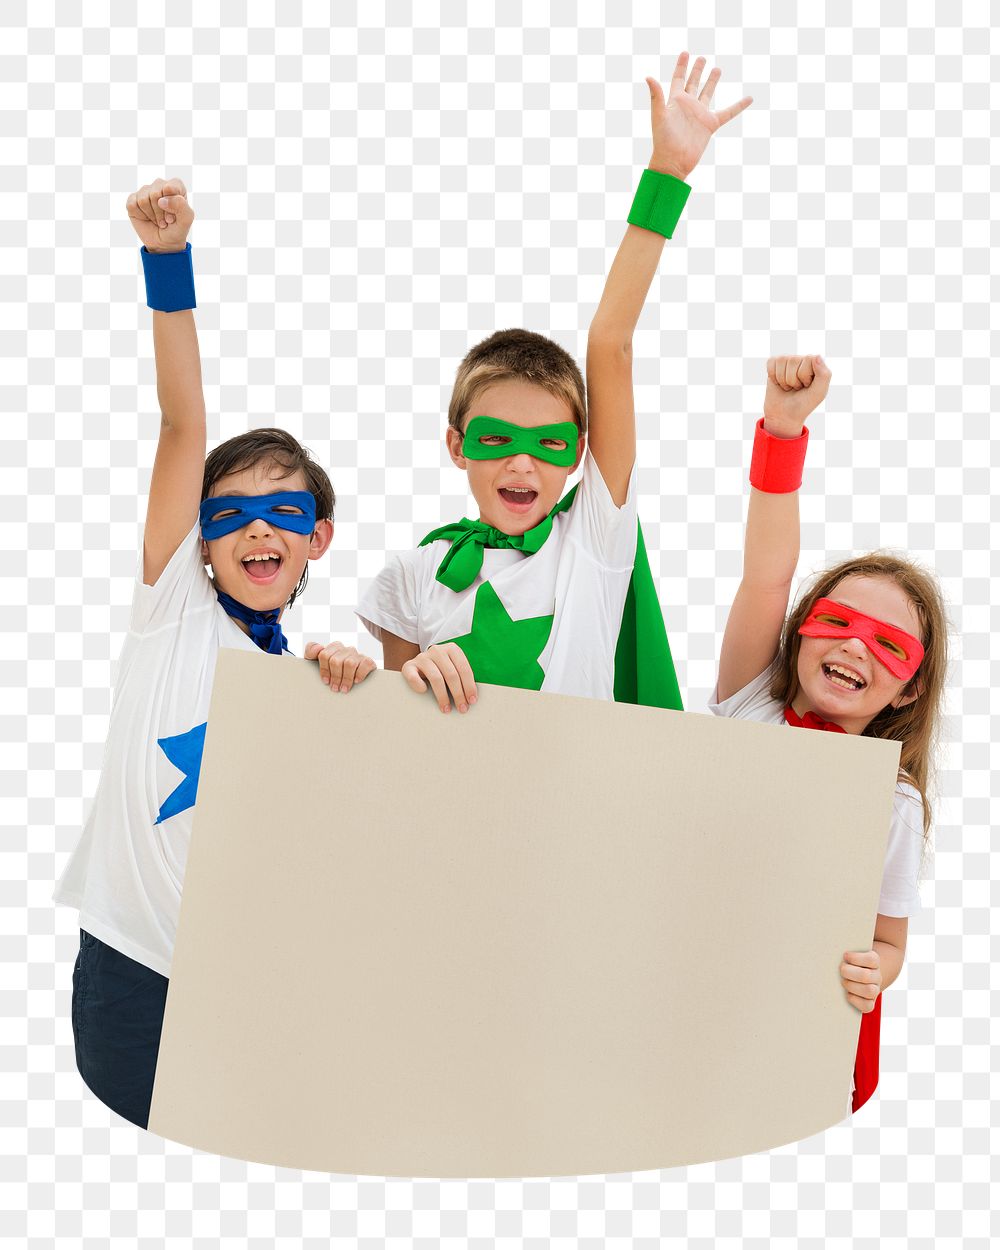 Kids holding empty sign png element, transparent background